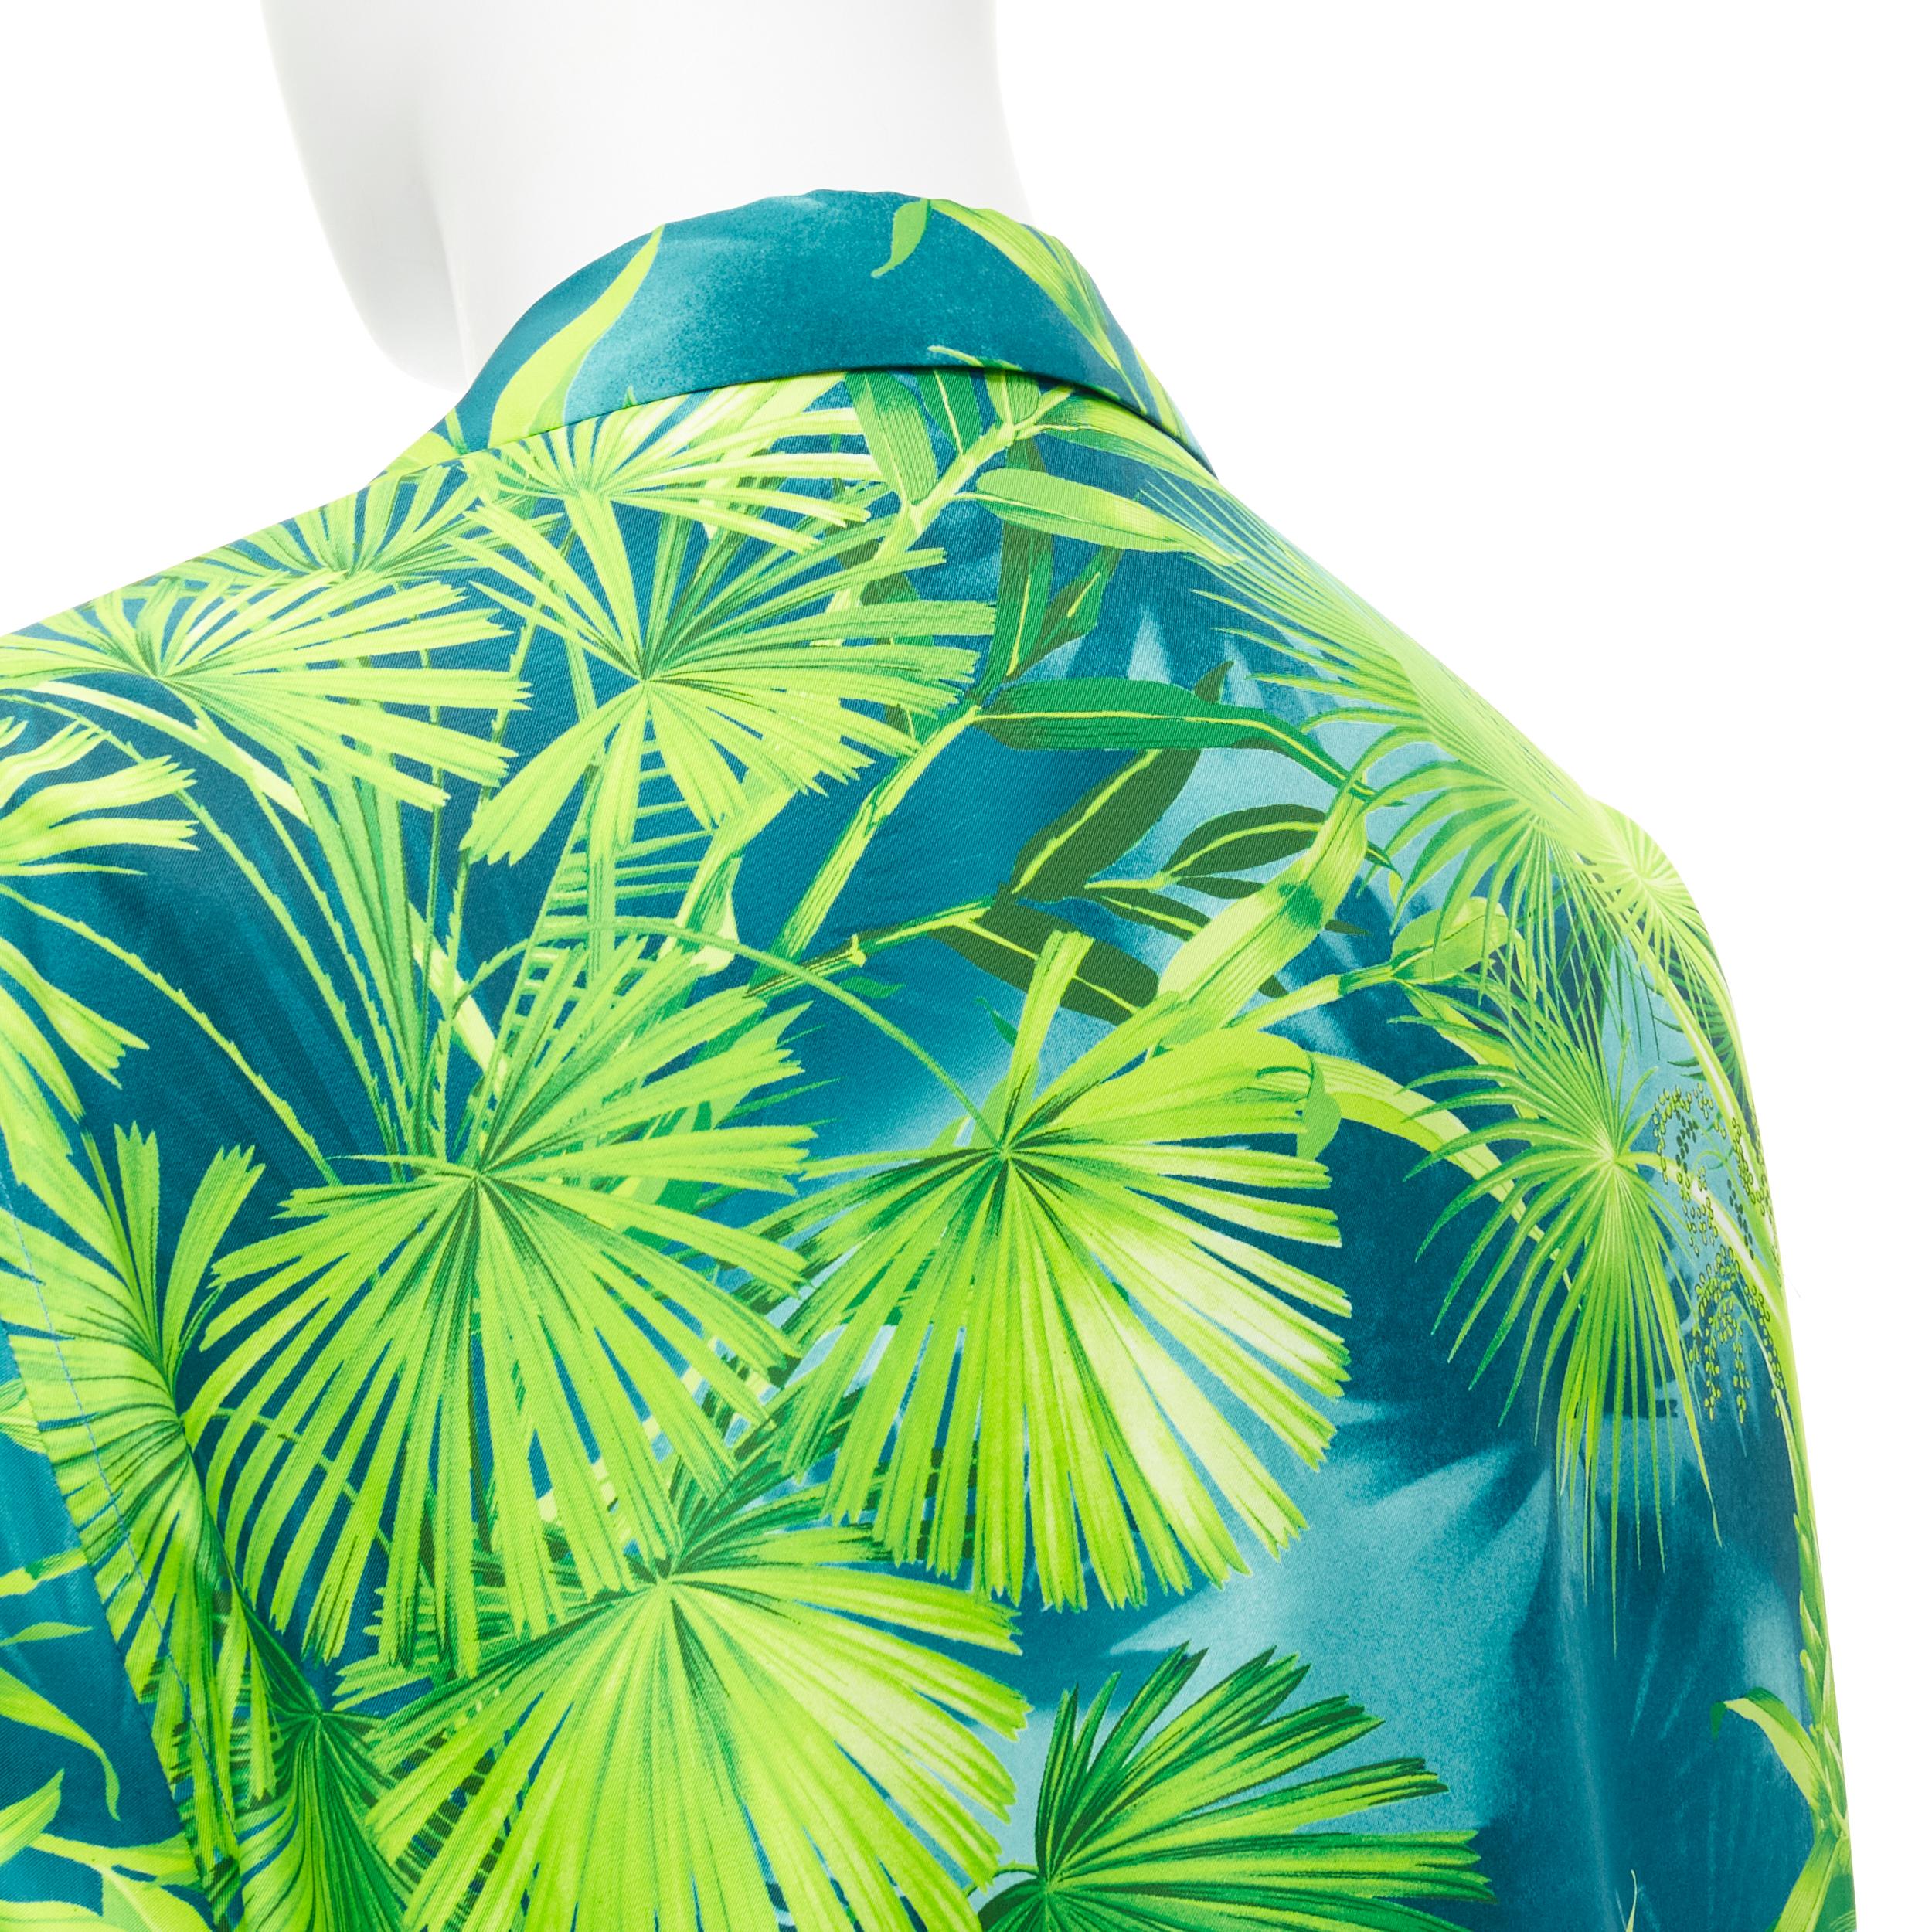 new VERSACE 2020 Iconic JLo Jungle print green tropical print shirt EU38 S 1